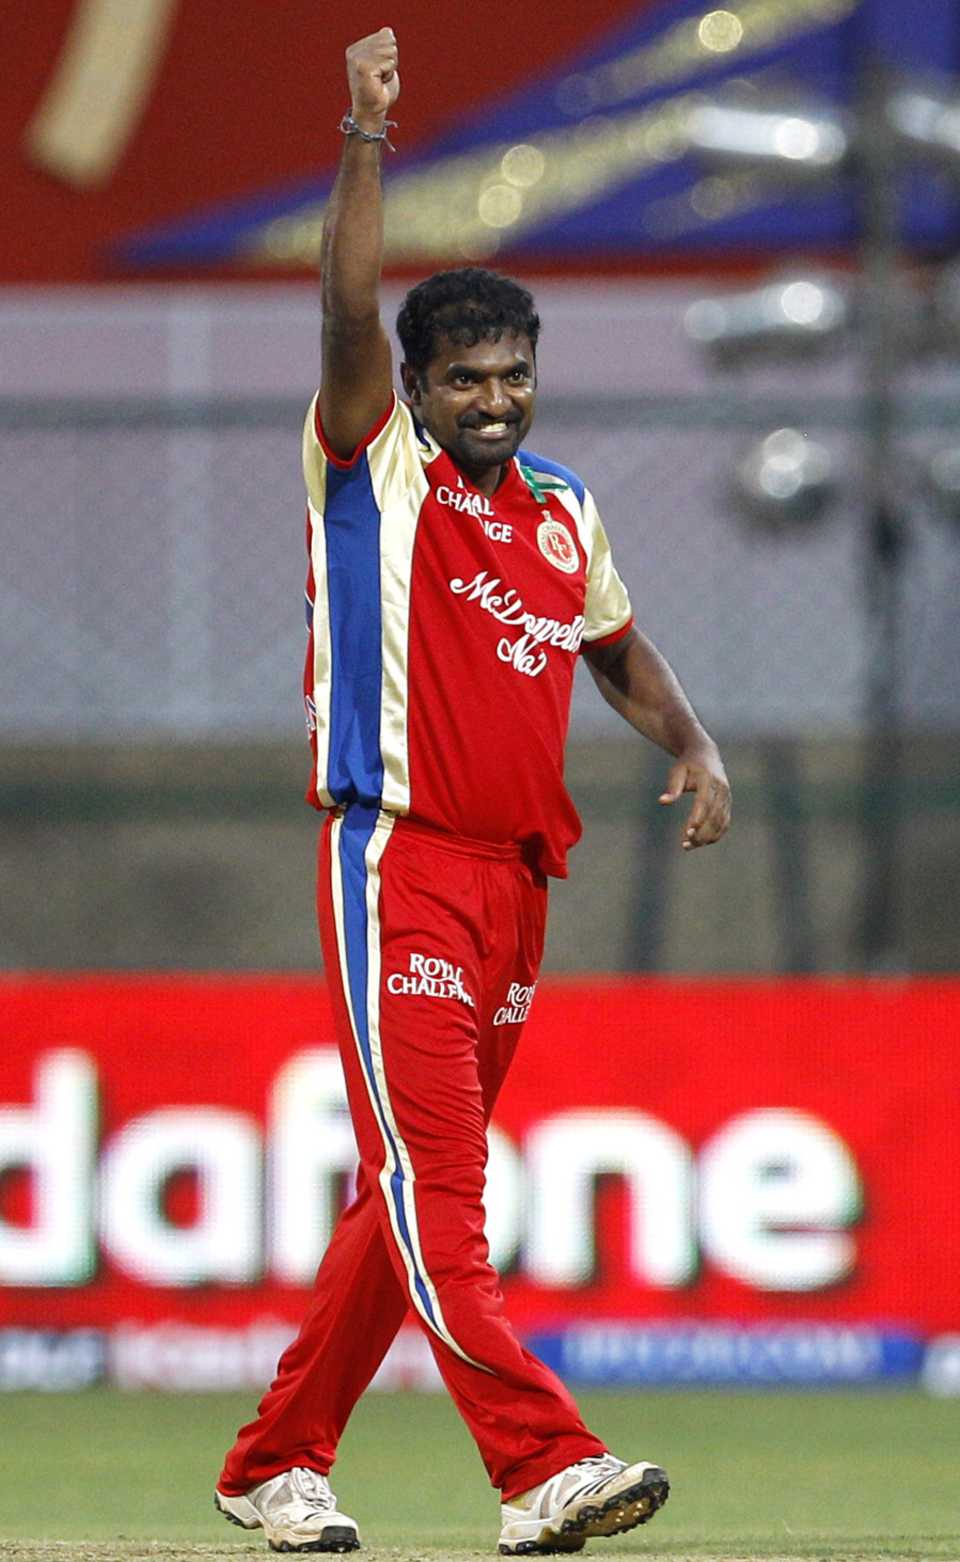 Muttiah Muralitharan picked up three wickets